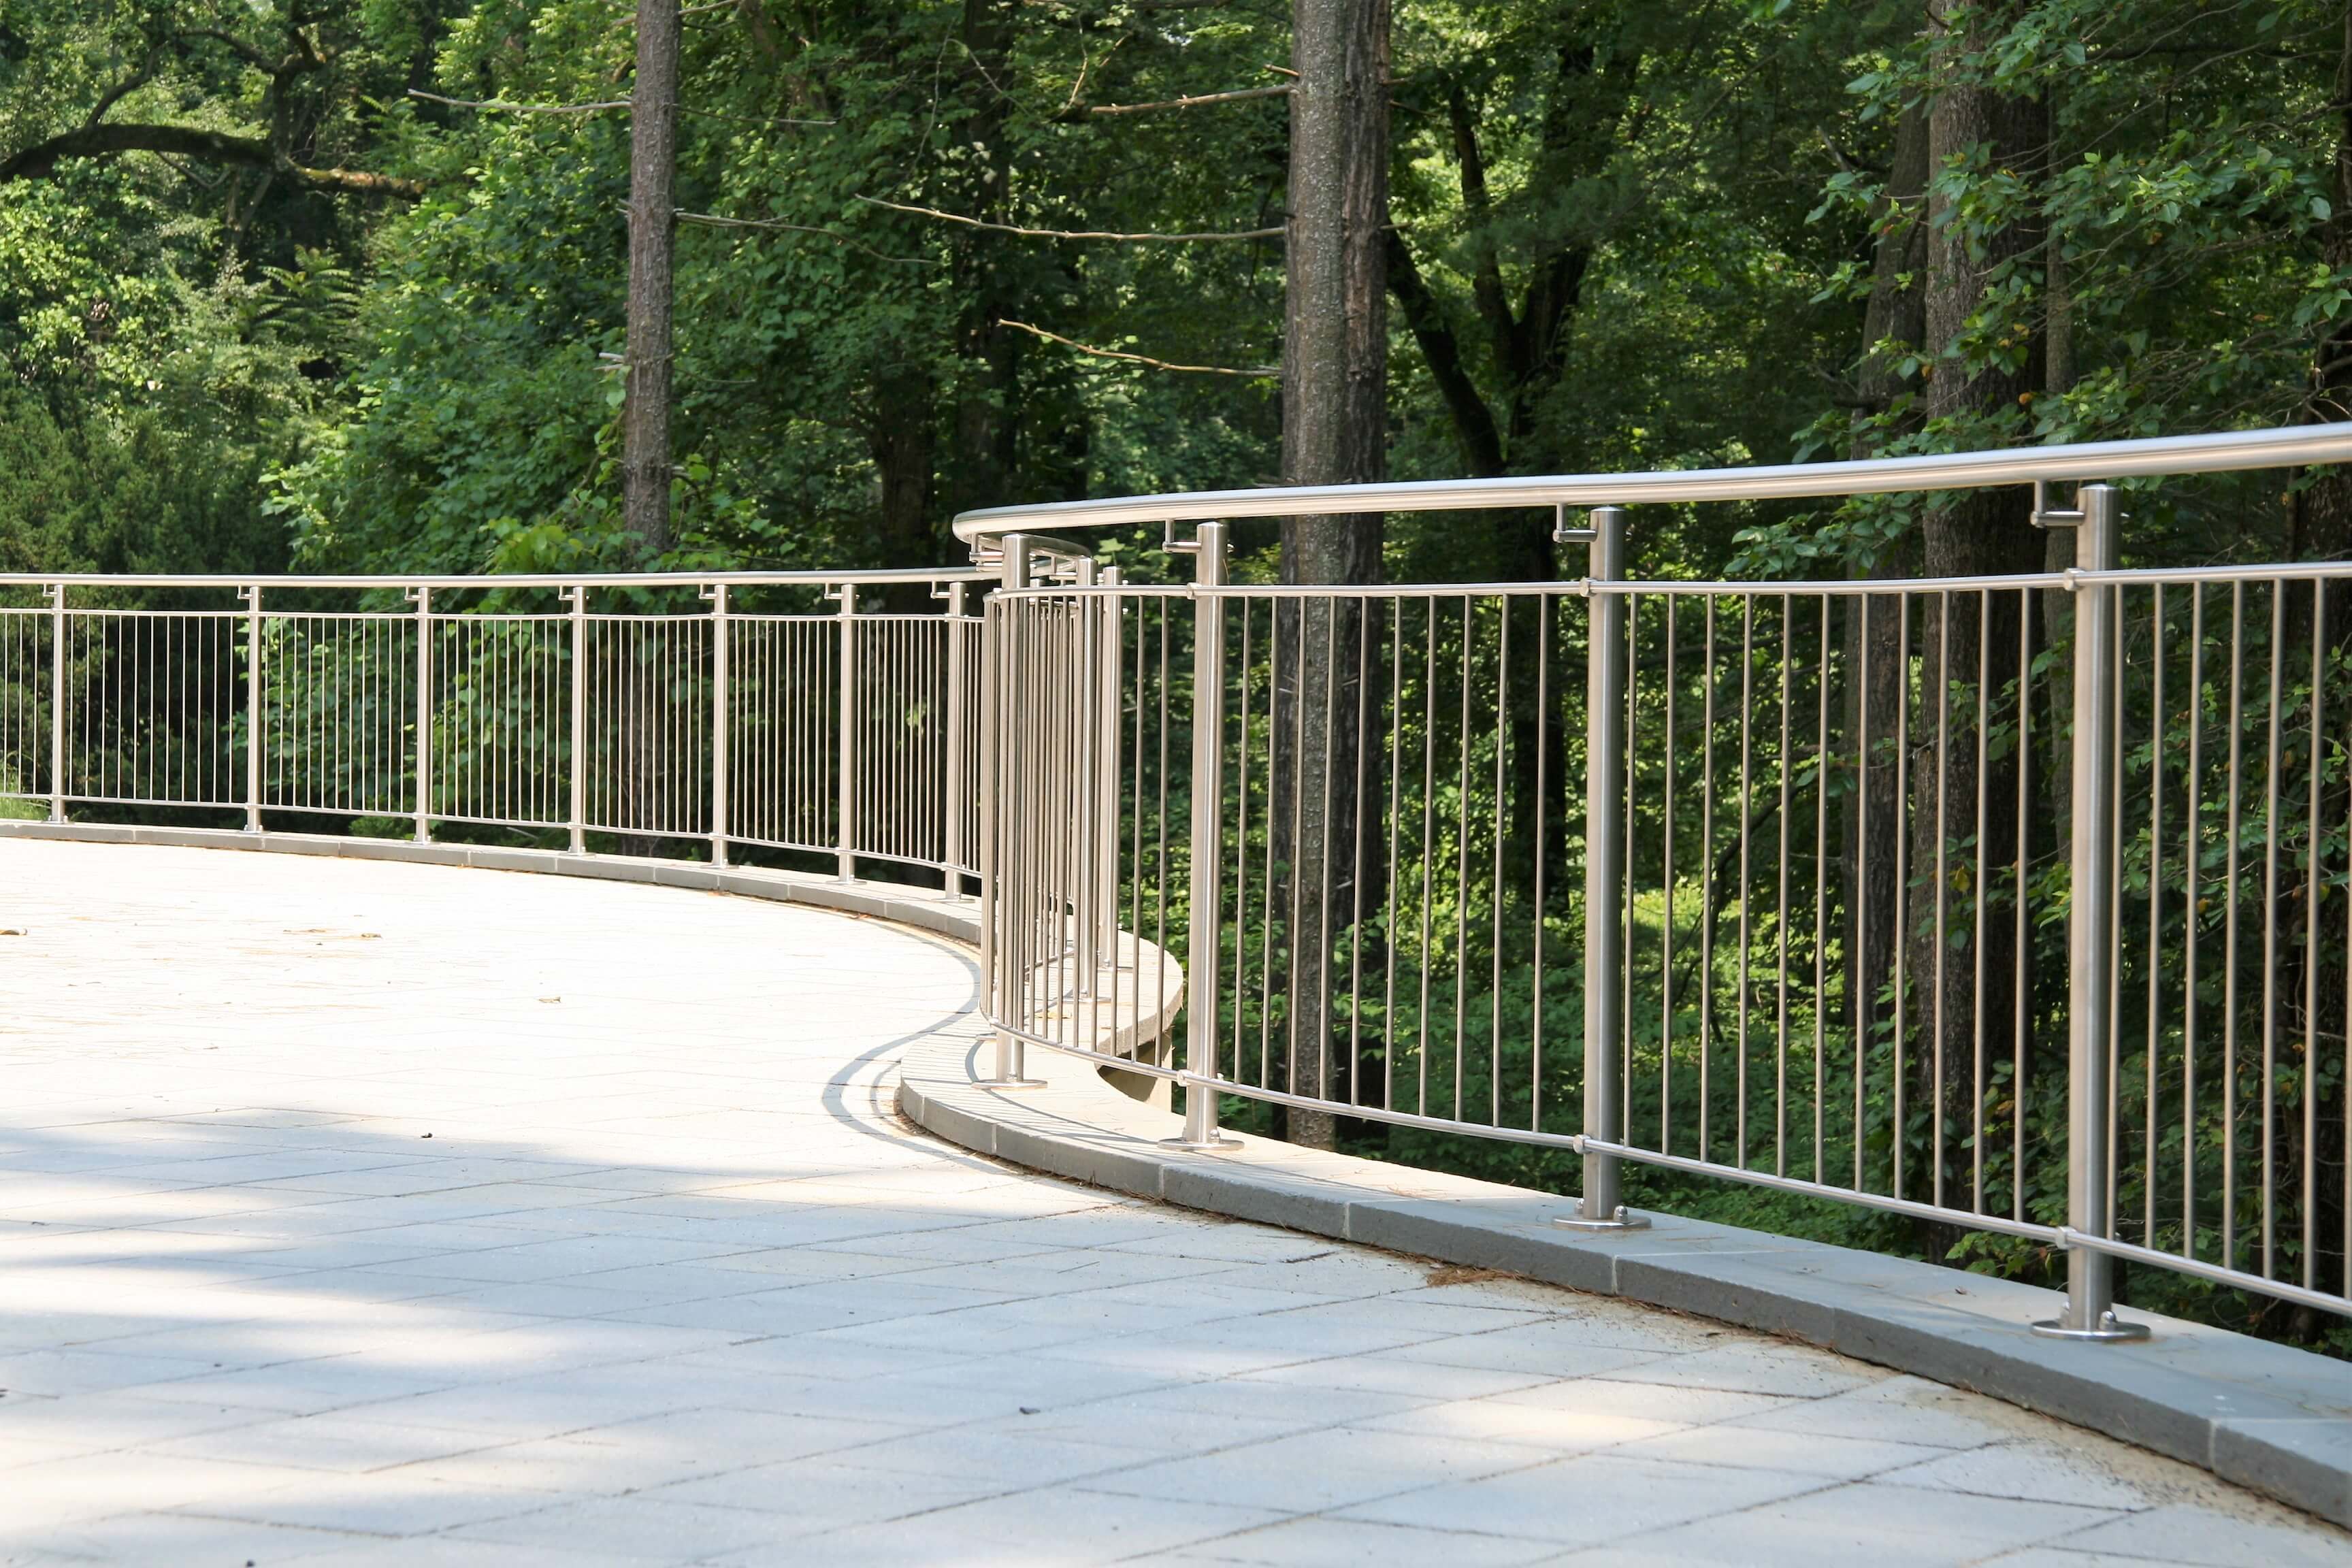 Outdoor office walkway Circum curved handrail installation at Gap International, PA.